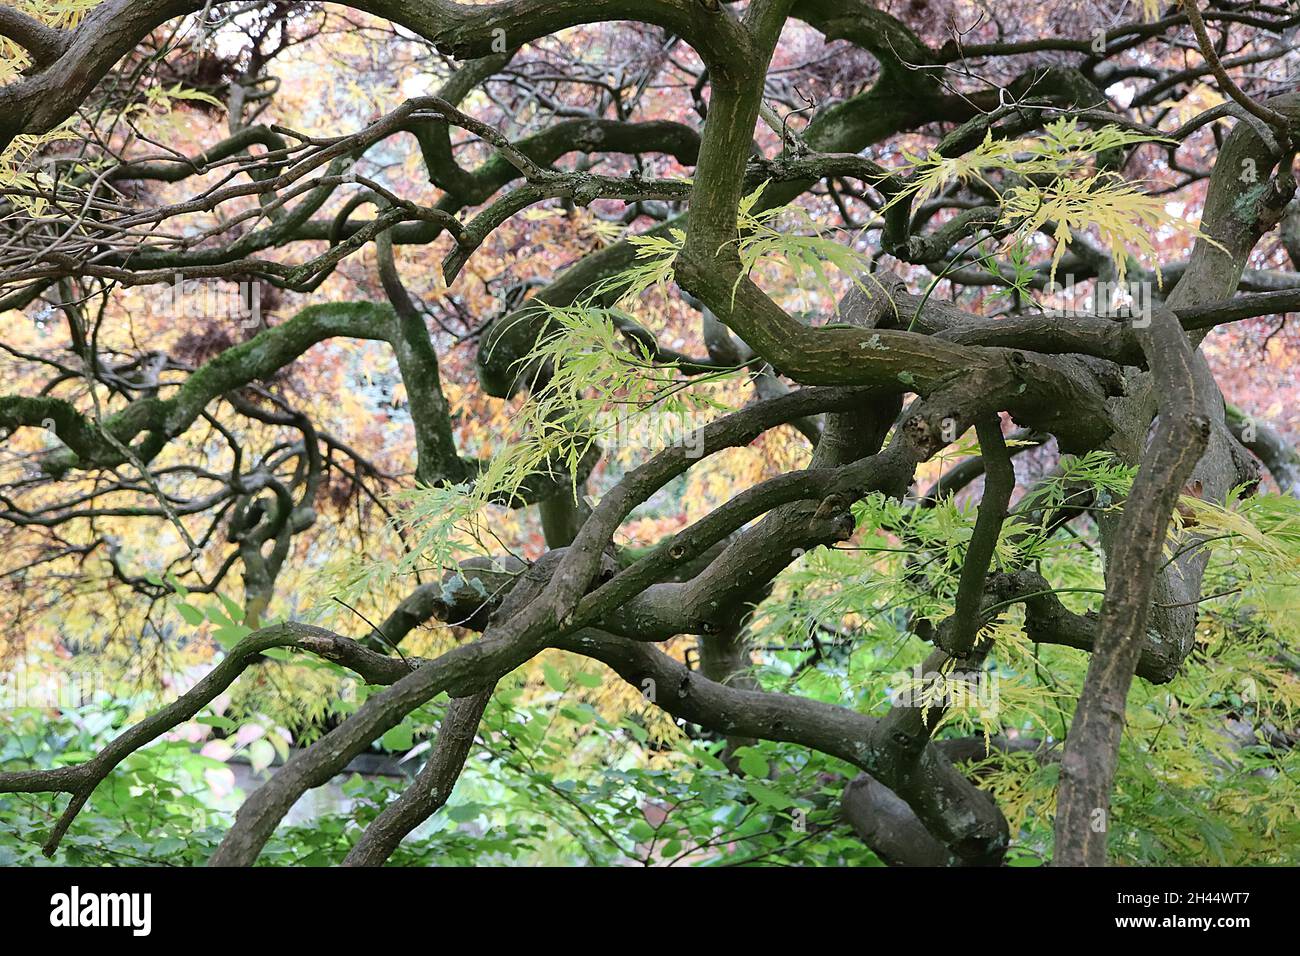 Acer palmatum dissectum ‘Atropurpureum’ Japanese cutleaf maple Atropurpureum – yellow, orange, red, green and burgundy lacelike leaves, twisting trunk Stock Photo